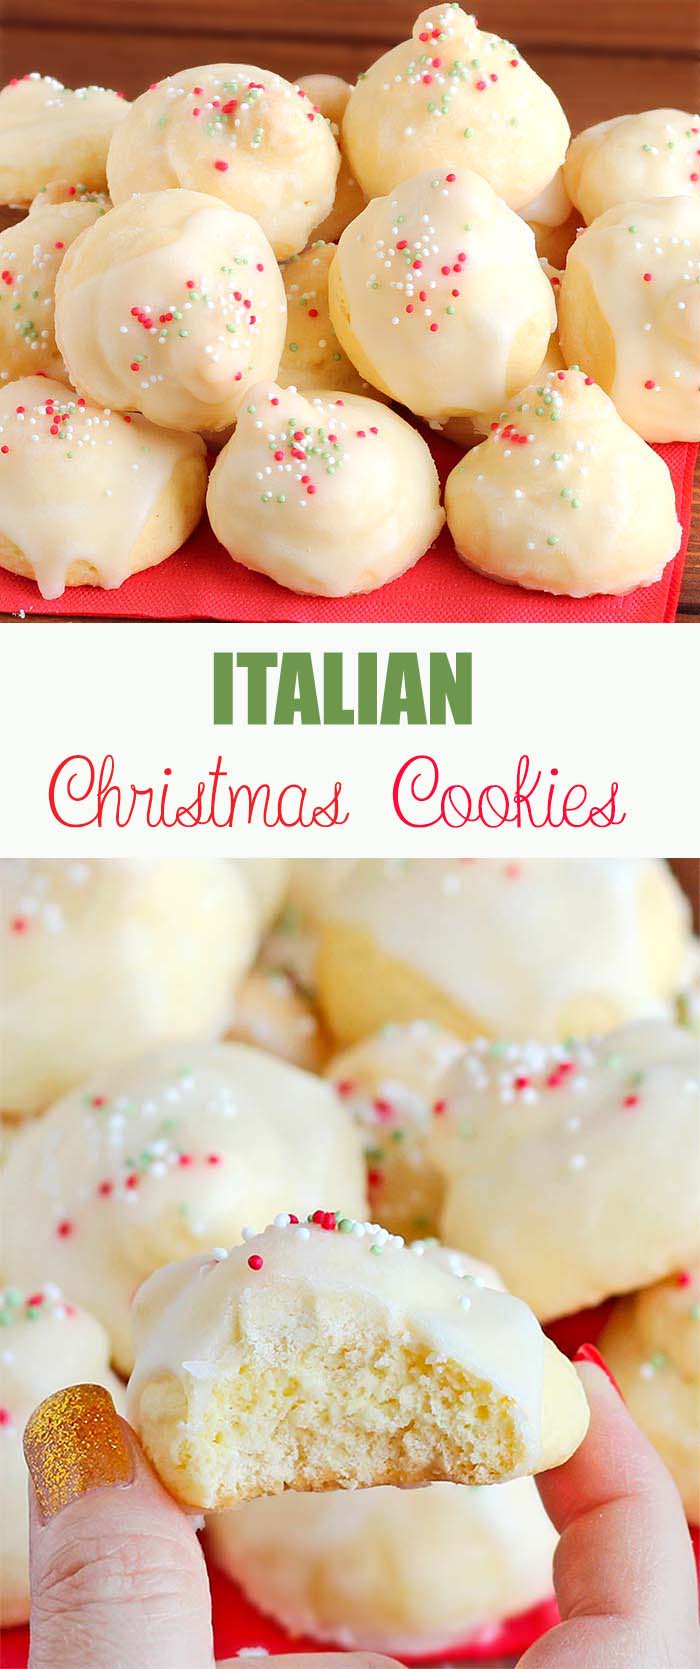 Italian Christmas Cookies - Cakescottage